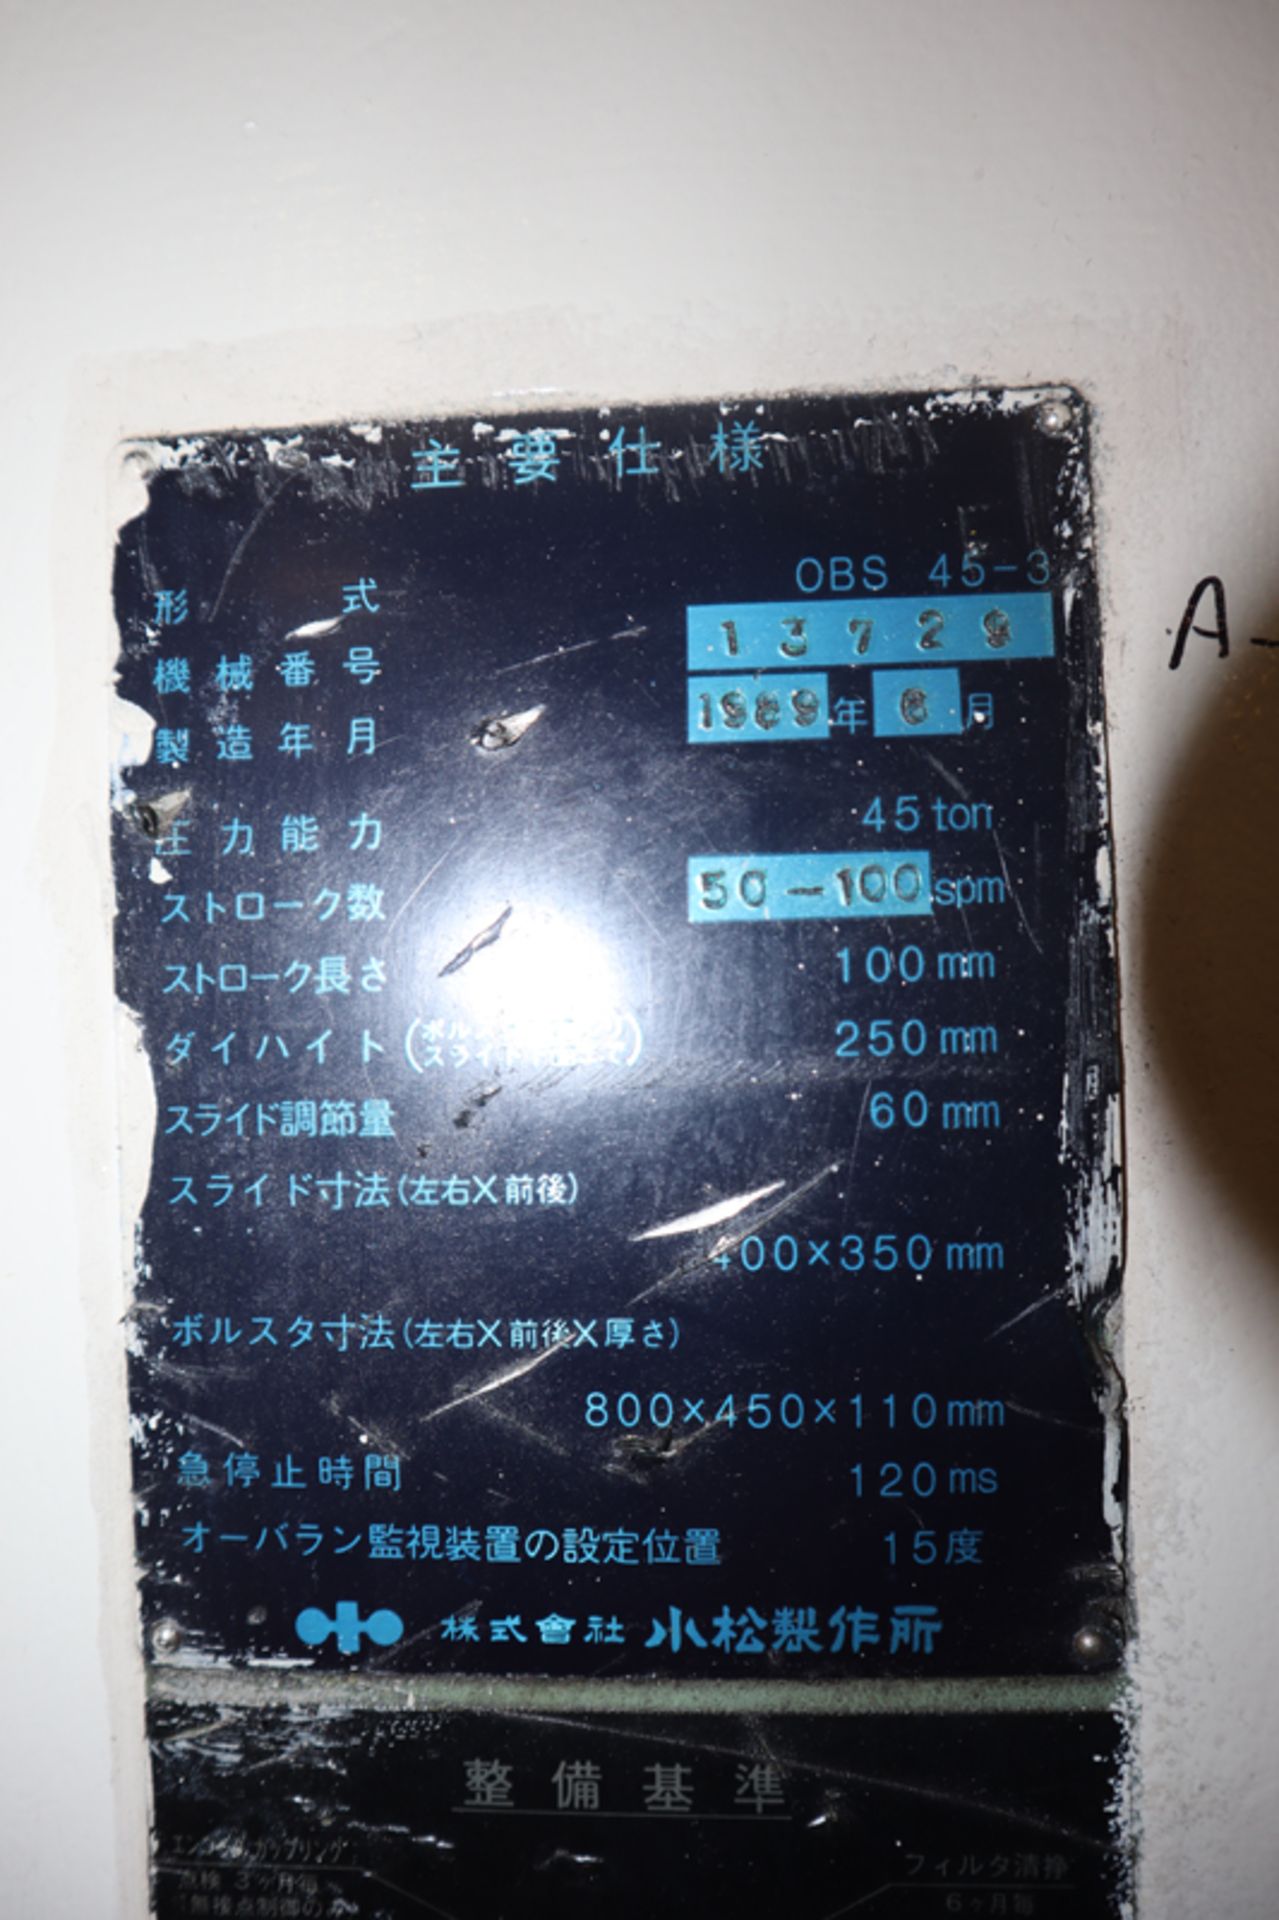 Komatsu OBS 45-3 (1989, Refurb 2001) - Image 6 of 10